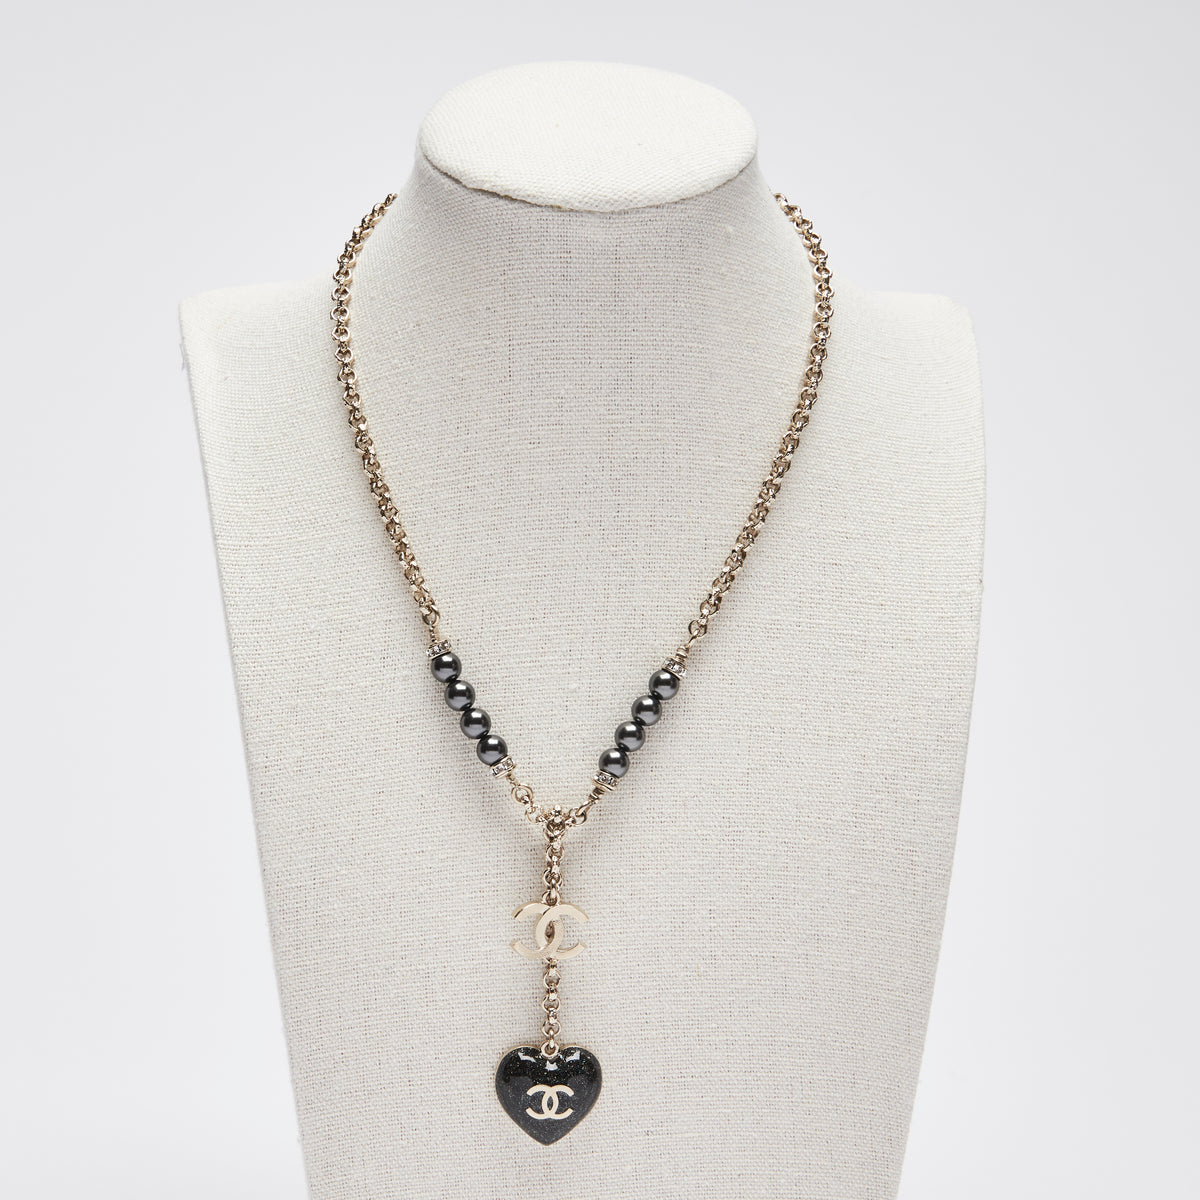 Chanel-style Black Heart Pendant Necklace – El blin-blín